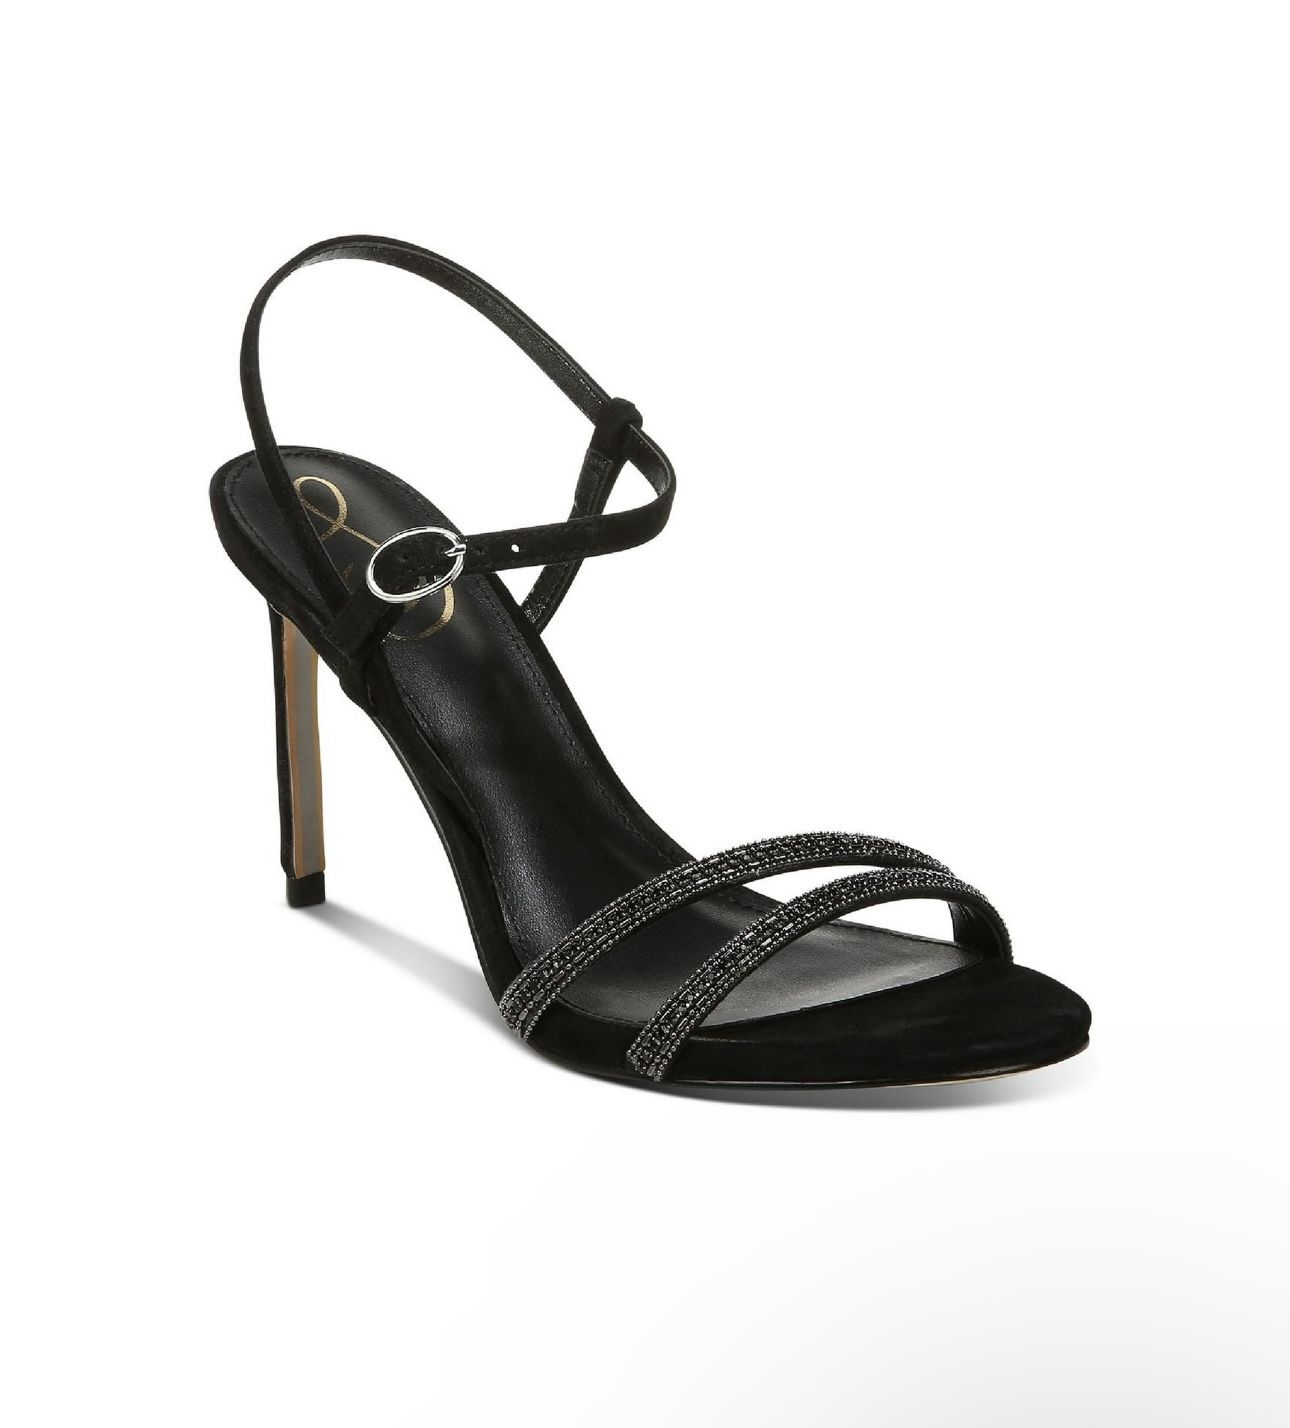 NWT Sam Edelman Womens Daisie Embellished Ankle Heels black with rhinestones 8.5